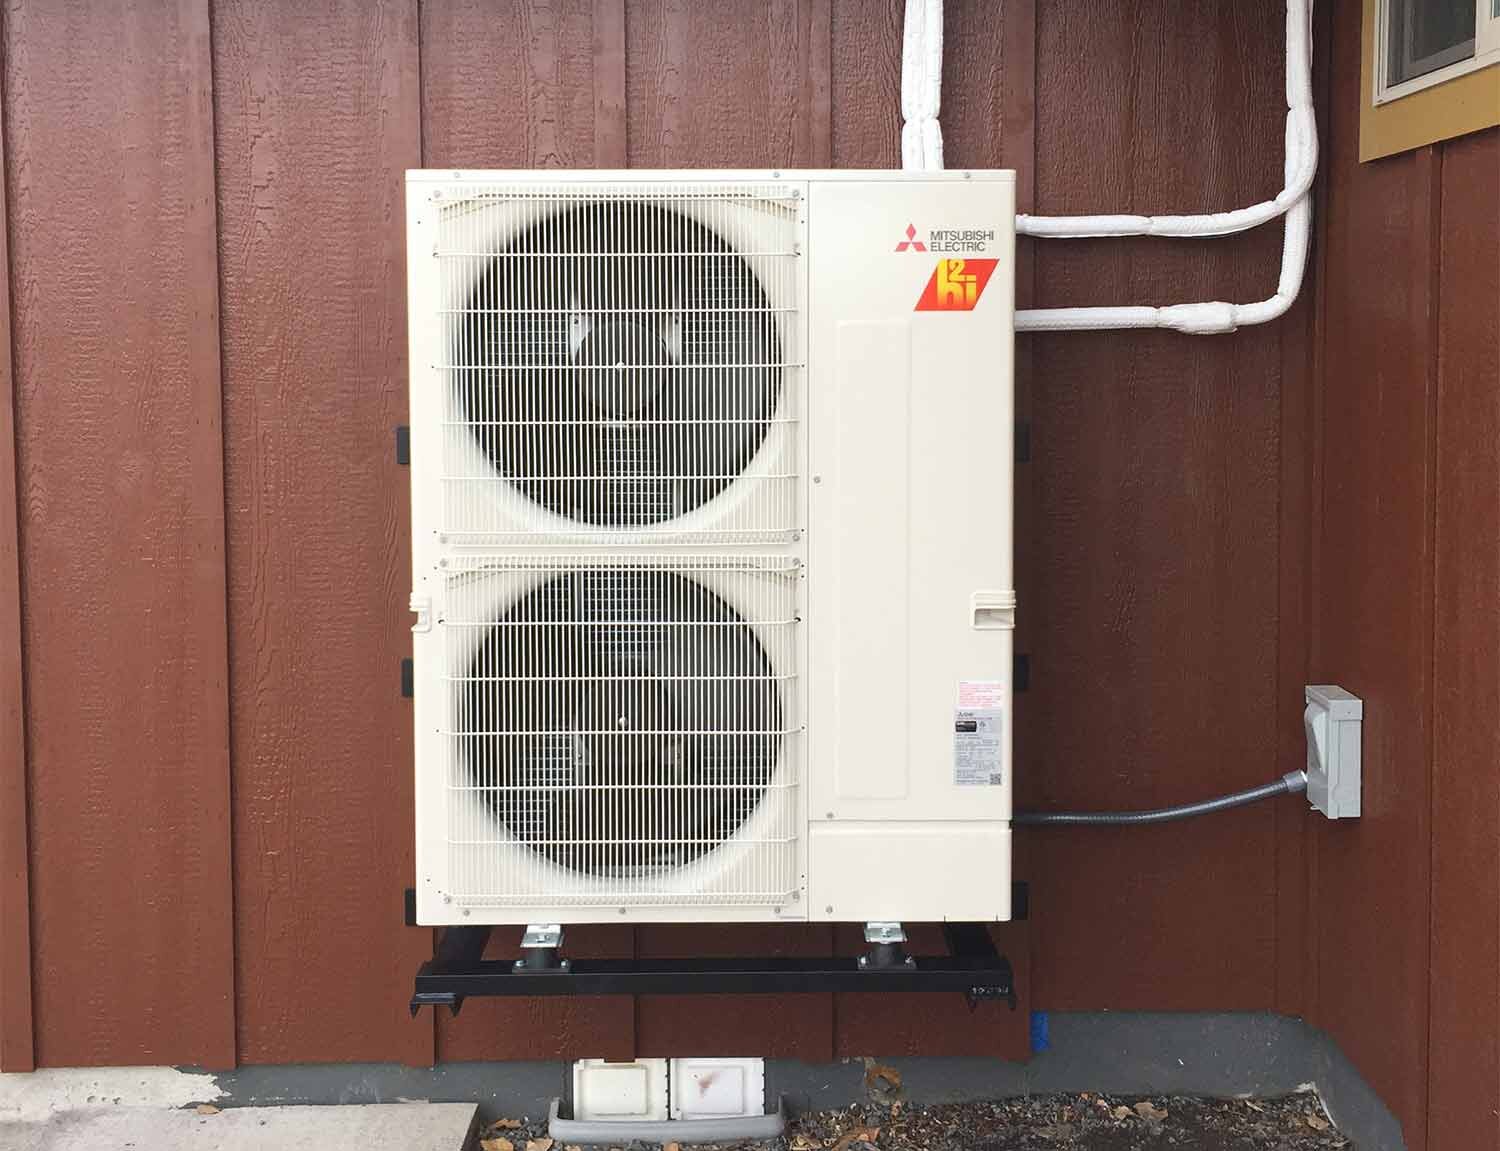 Case Study: Mitsubishi Heat Pump - Bend, Oregon │ Bend Heat Pump Case Study - GreenSavers - Home energy contractor in Portland and Bend, Oregon. Install insulation, HVAC, and windows.